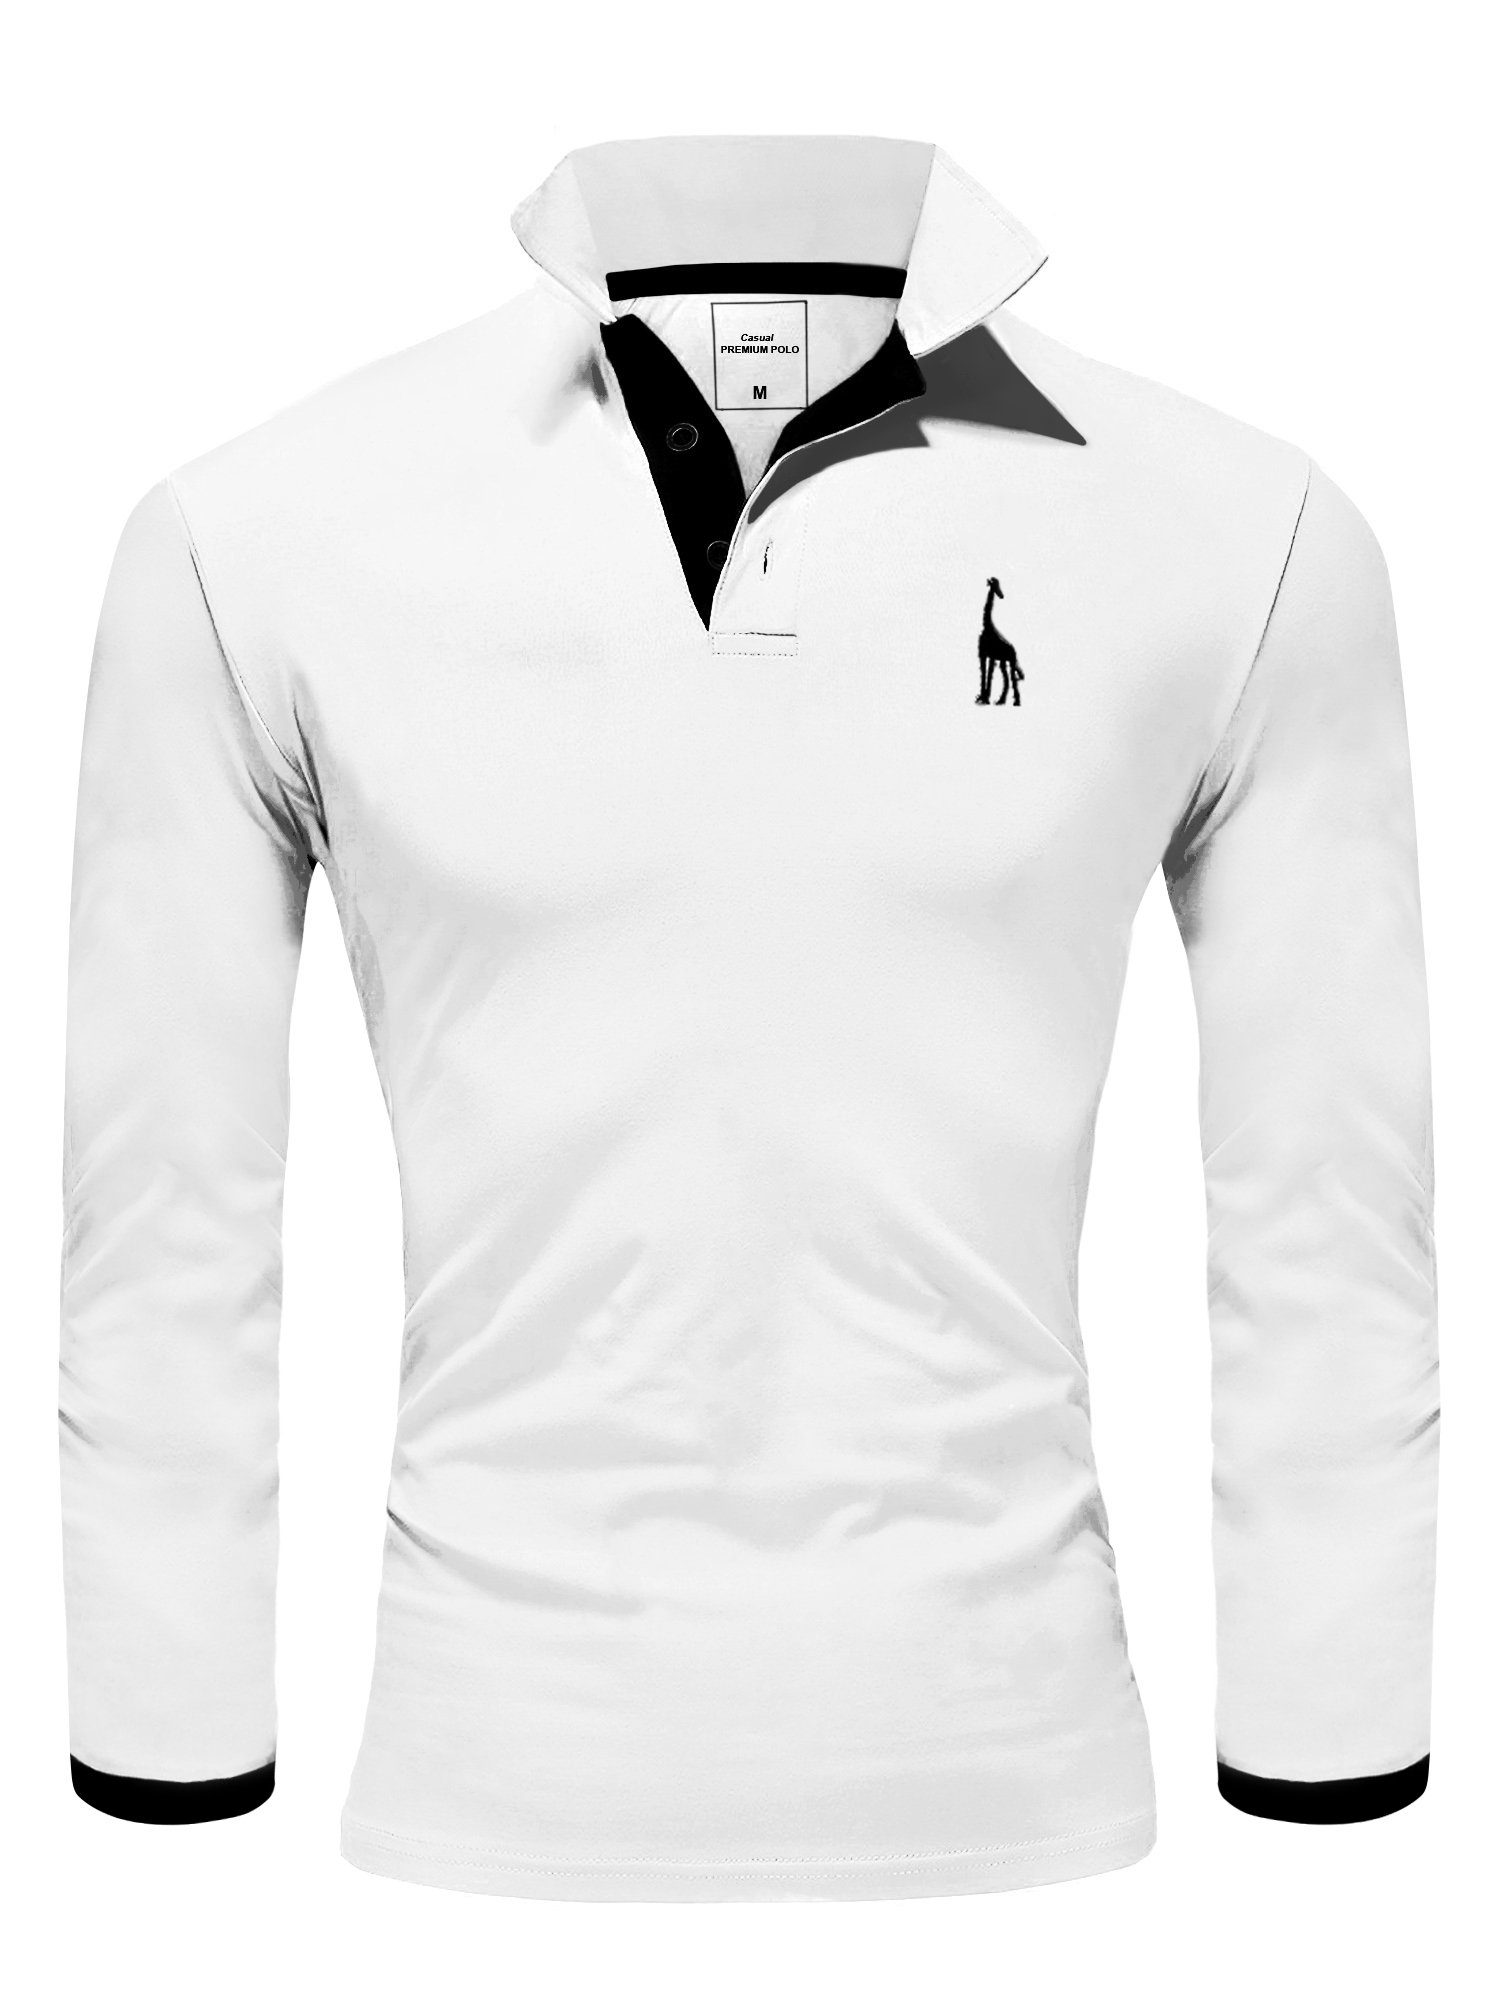 REPUBLIX Poloshirt AIDEN Herren Polo Basic Weiß/Schwarz Kontrast Langarm Hemd